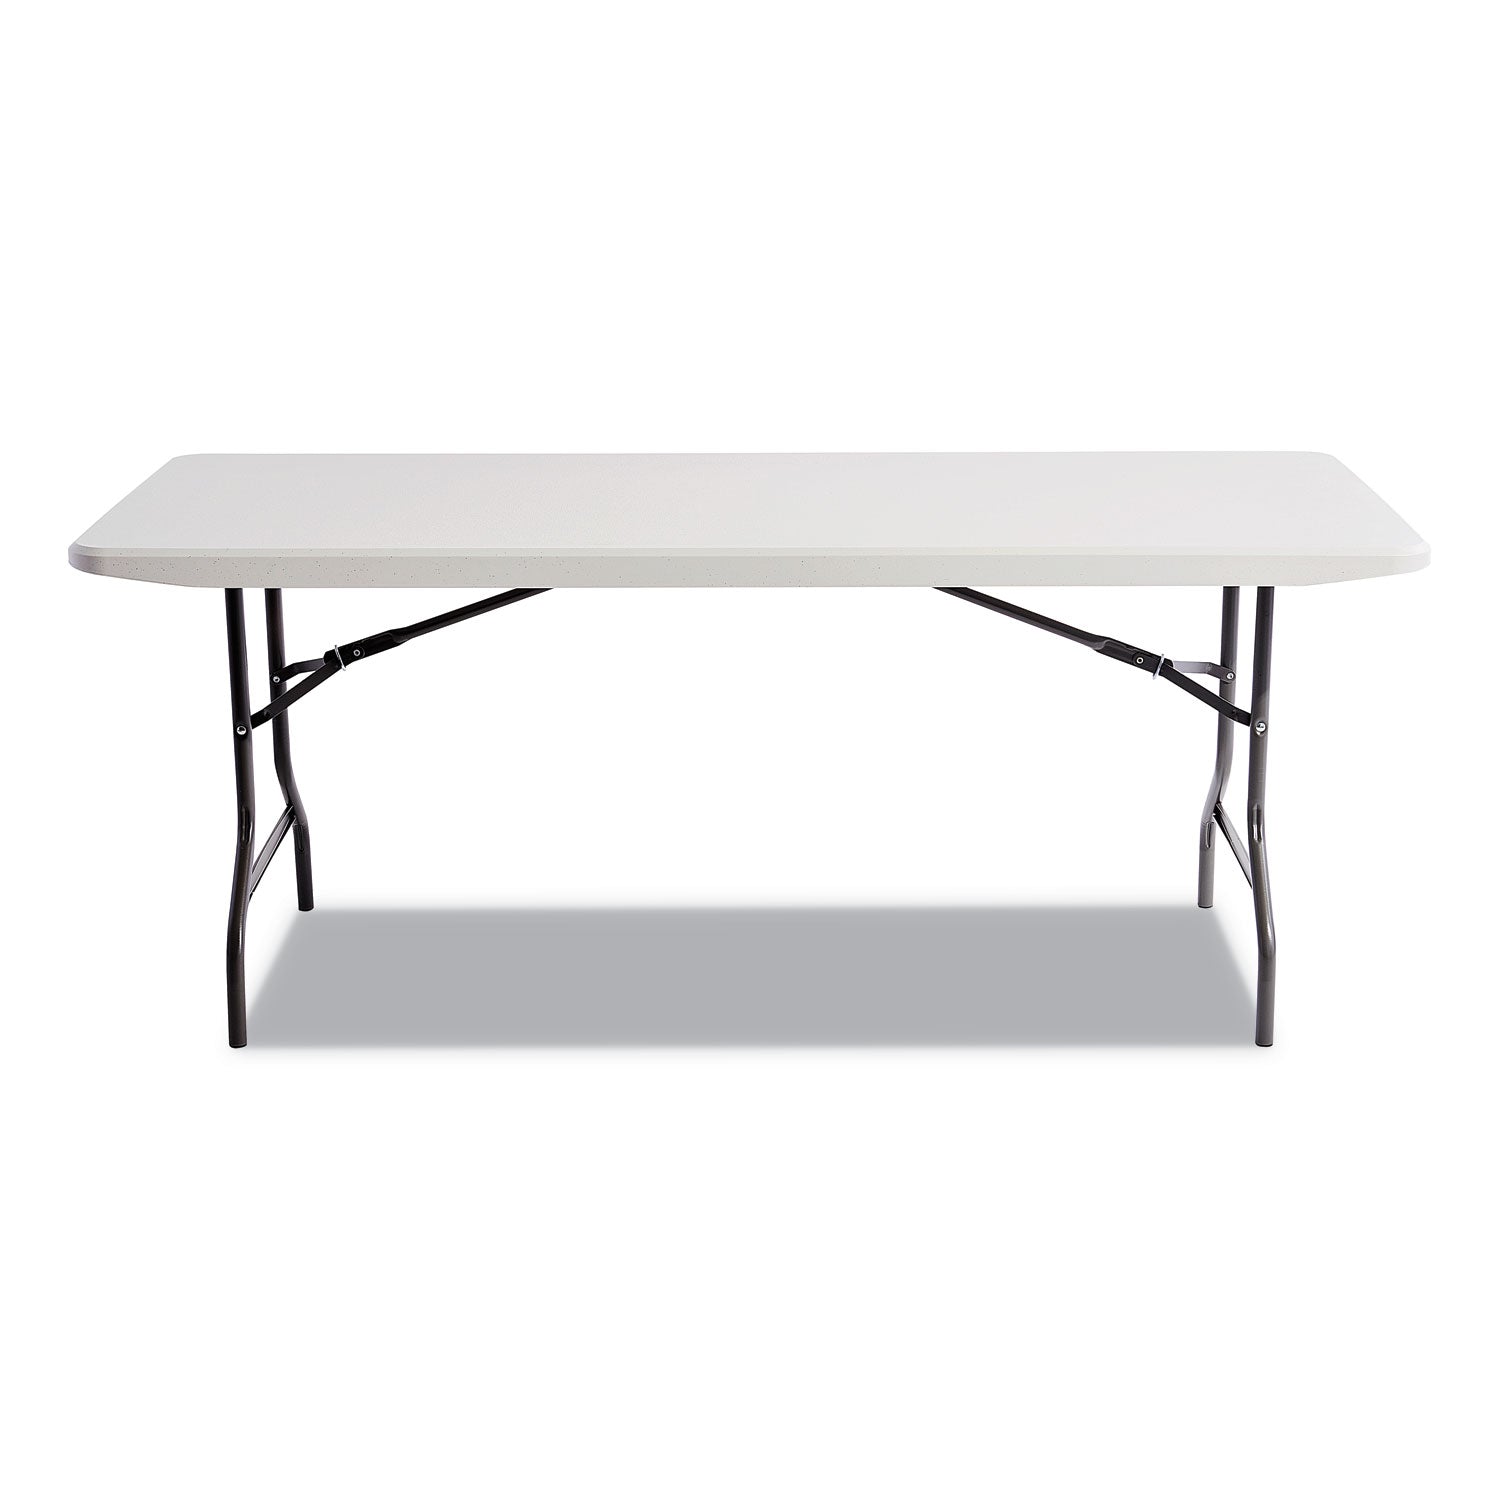 Resin Rectangular Folding Table, Square Edge, 72w x 30d x 29h, Platinum - 